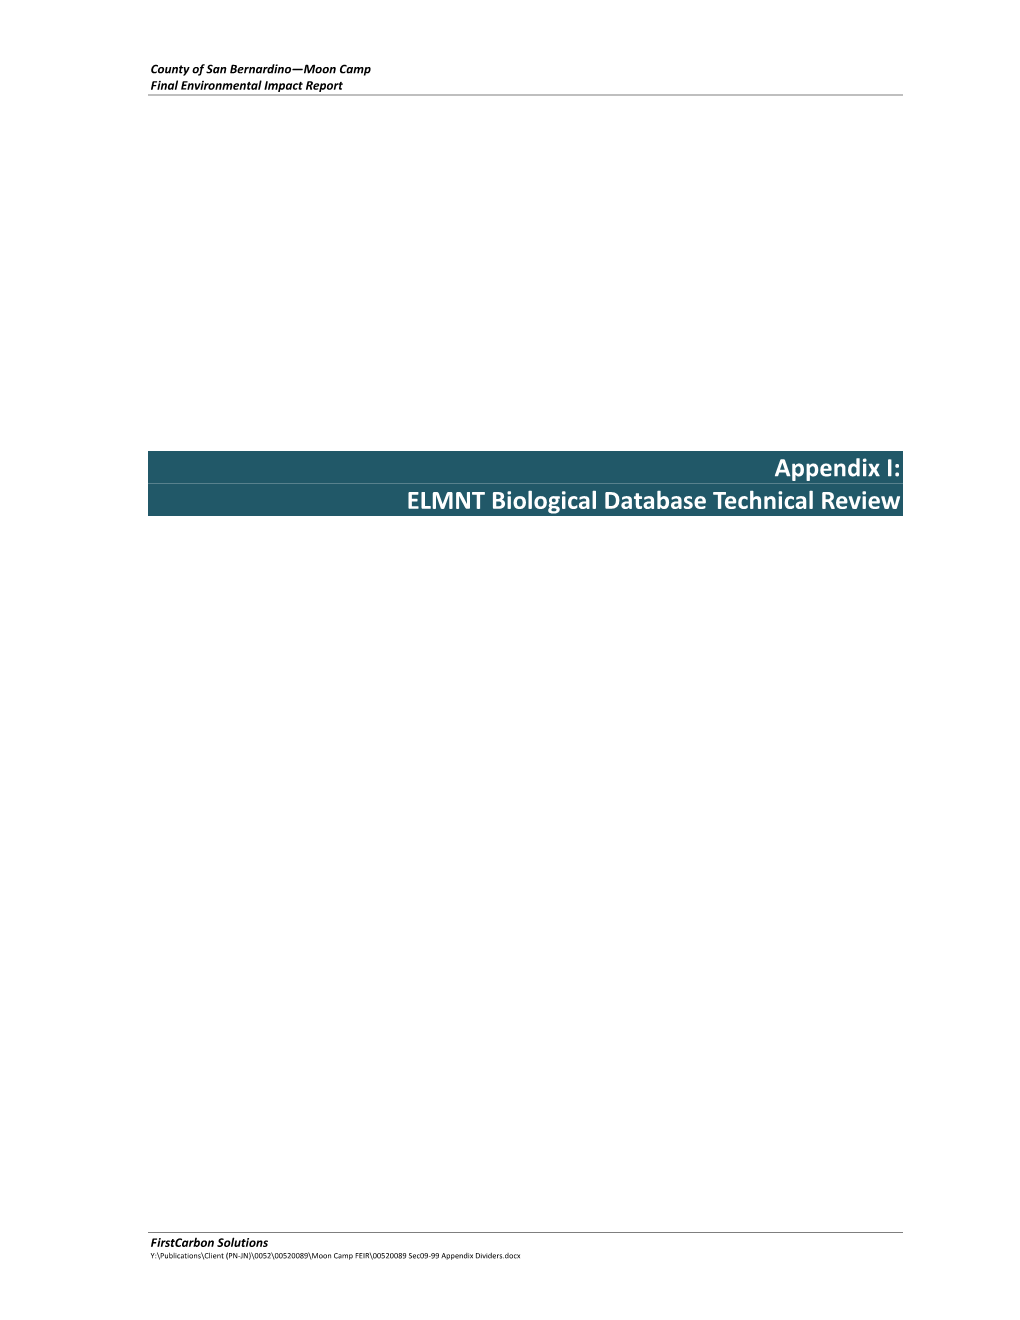 ELMNT Biological Database Technical Review